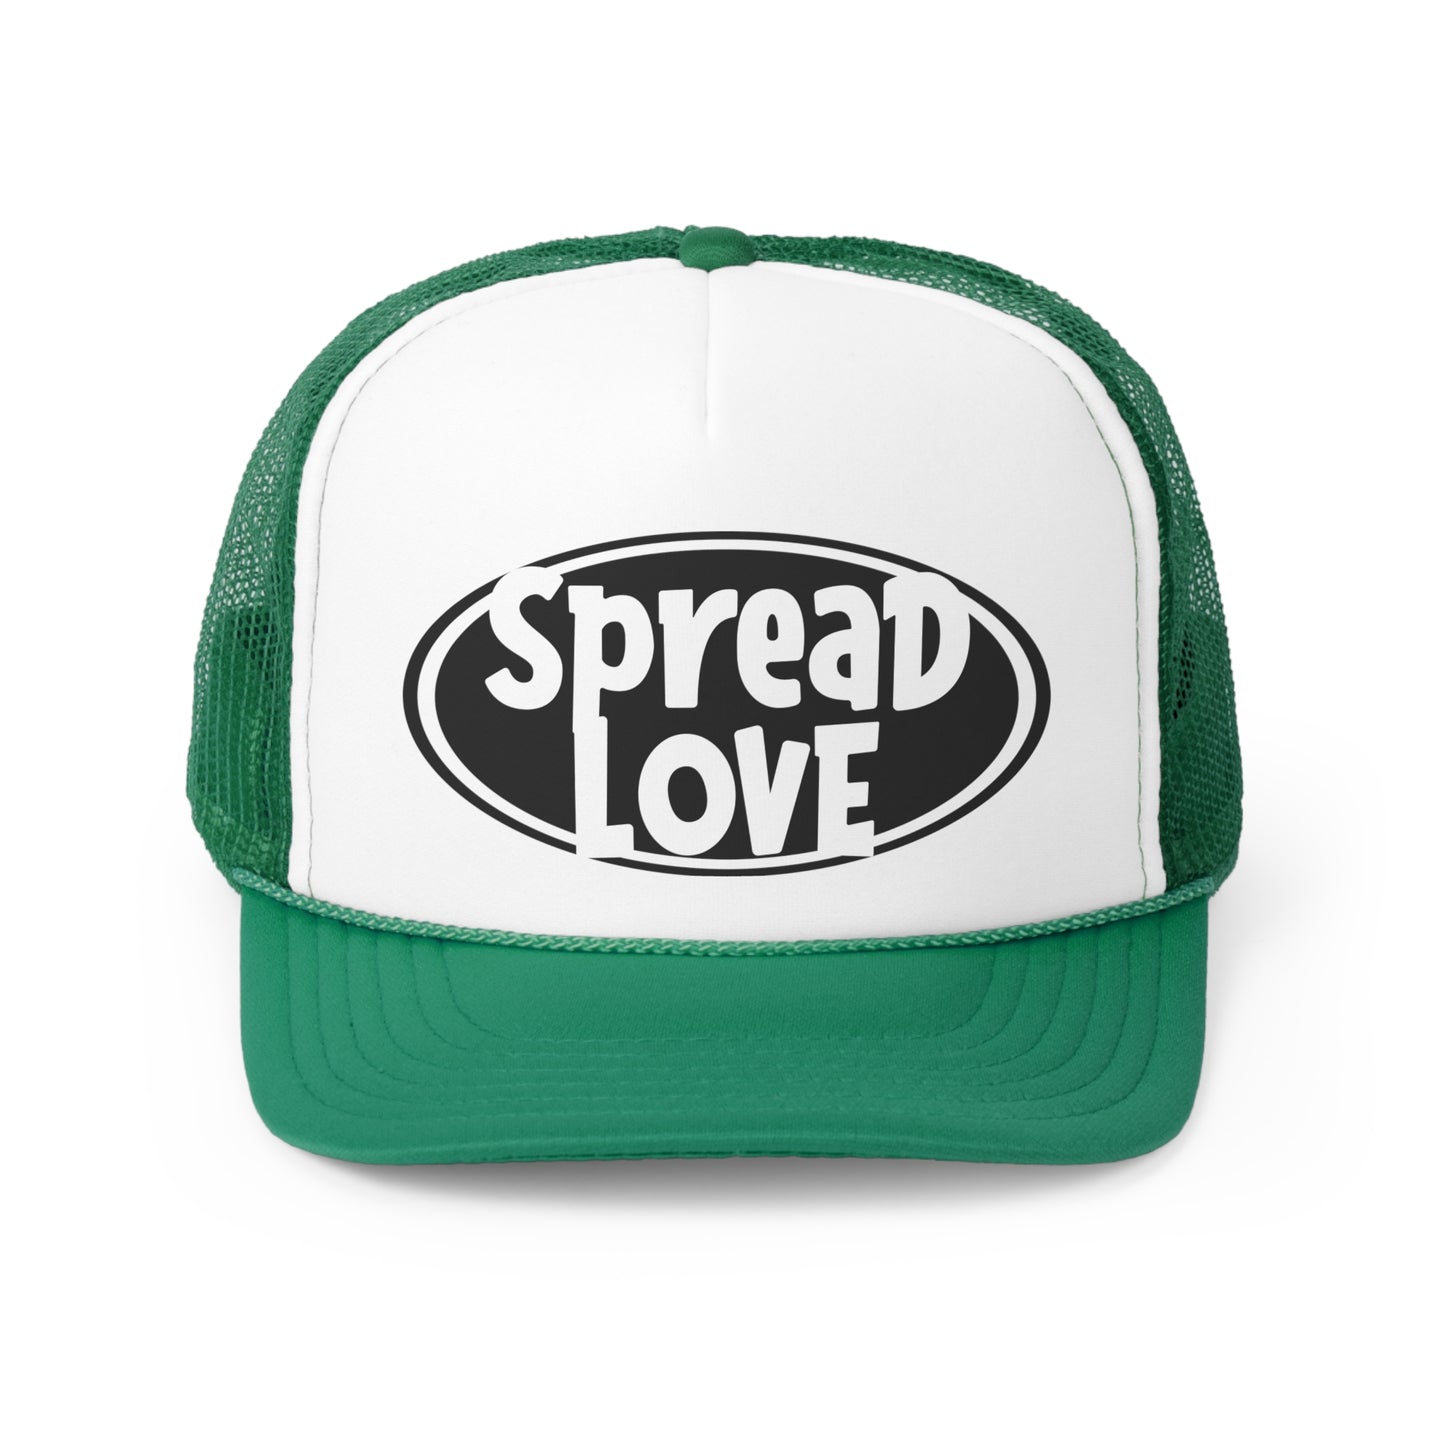 SPREAD LOVE TRUCKER CAPS